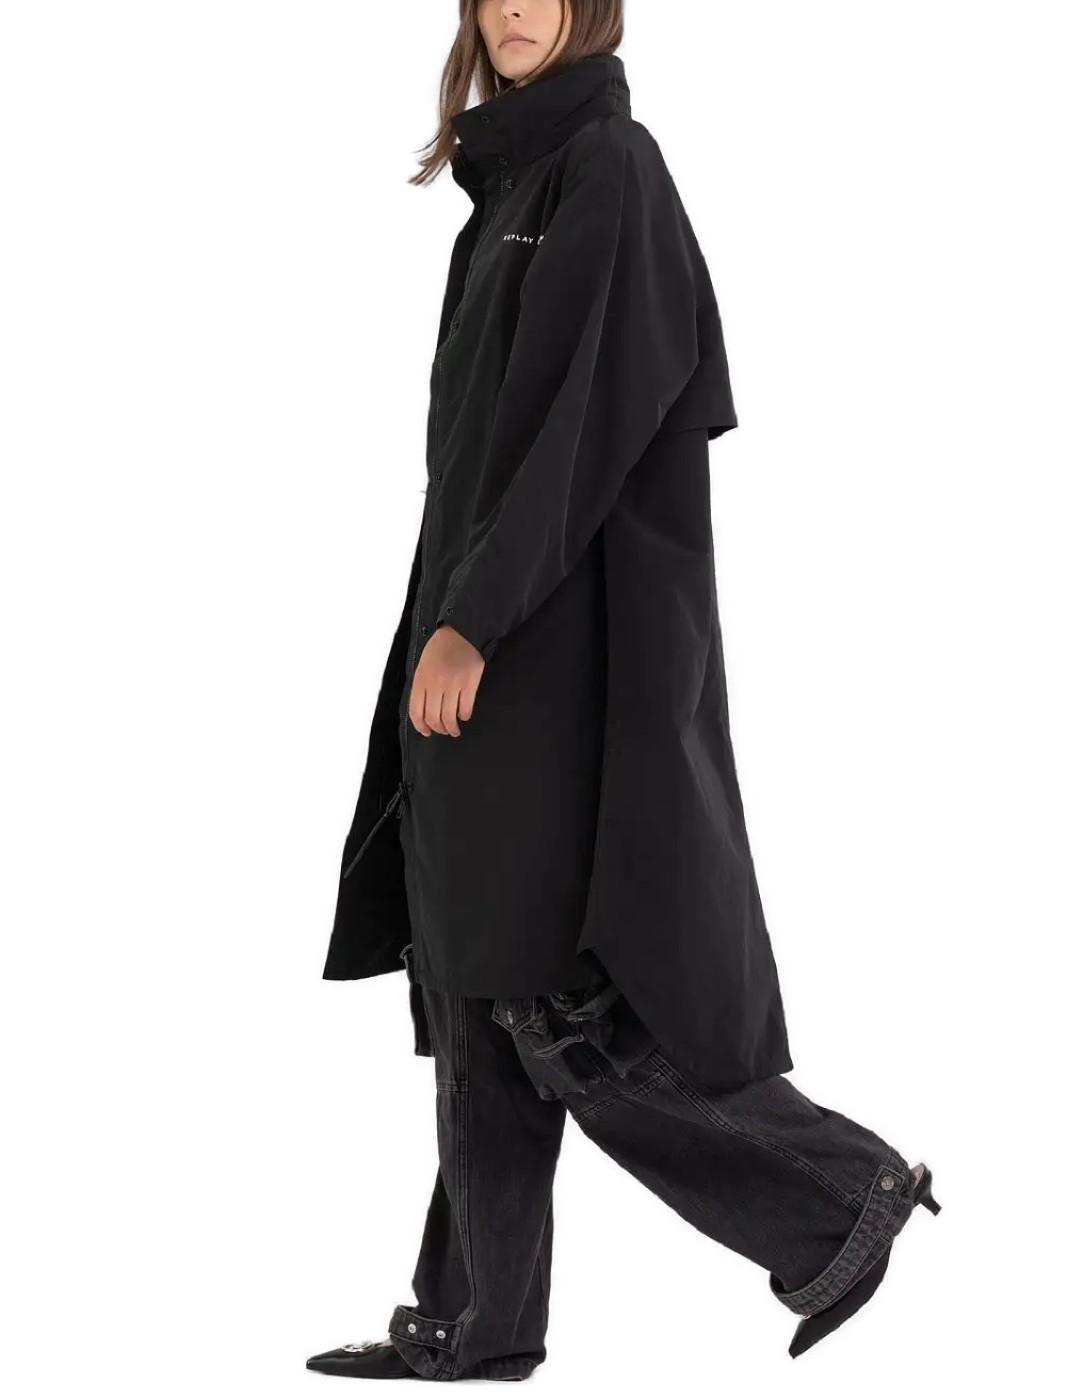 Chaqueta larga Replay negra con capucha extraible para mujer